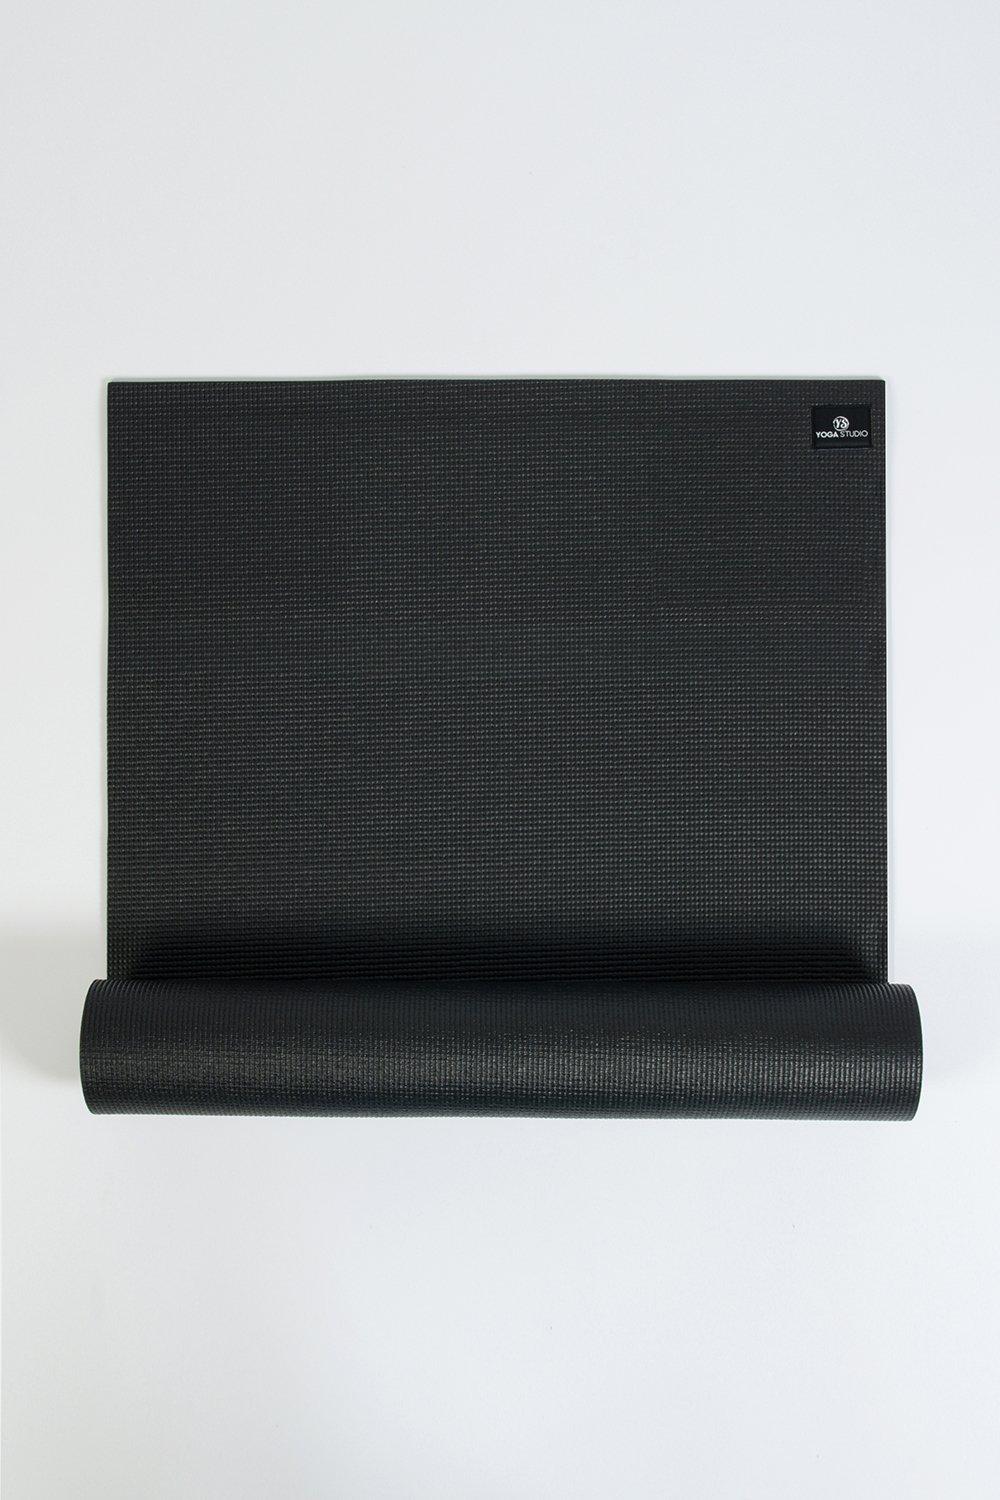 Yoga Studio Sticky Yoga Mat 6mm|black